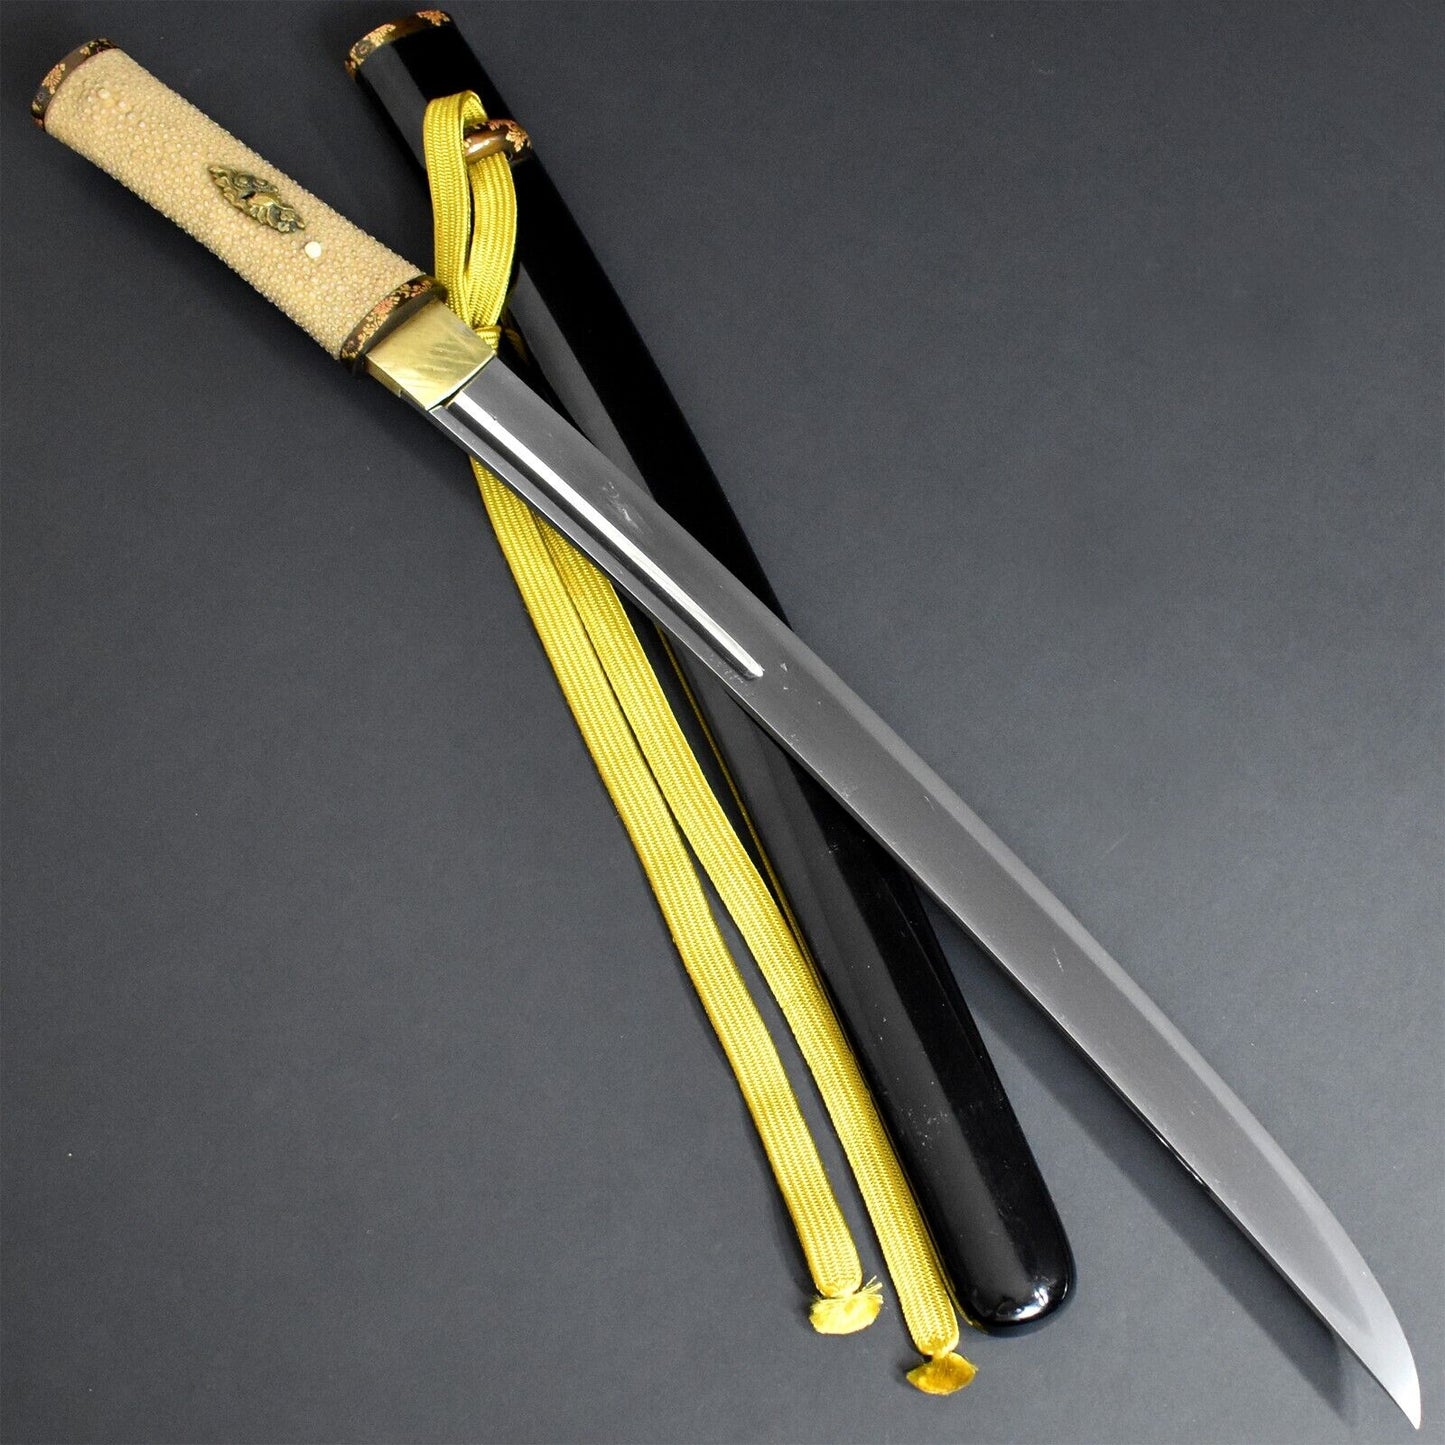 Antique Japanese Wakizashi Kanesaki Signed Samurai Sword Collectible Weapon Tamahagane Steel Muromachi.